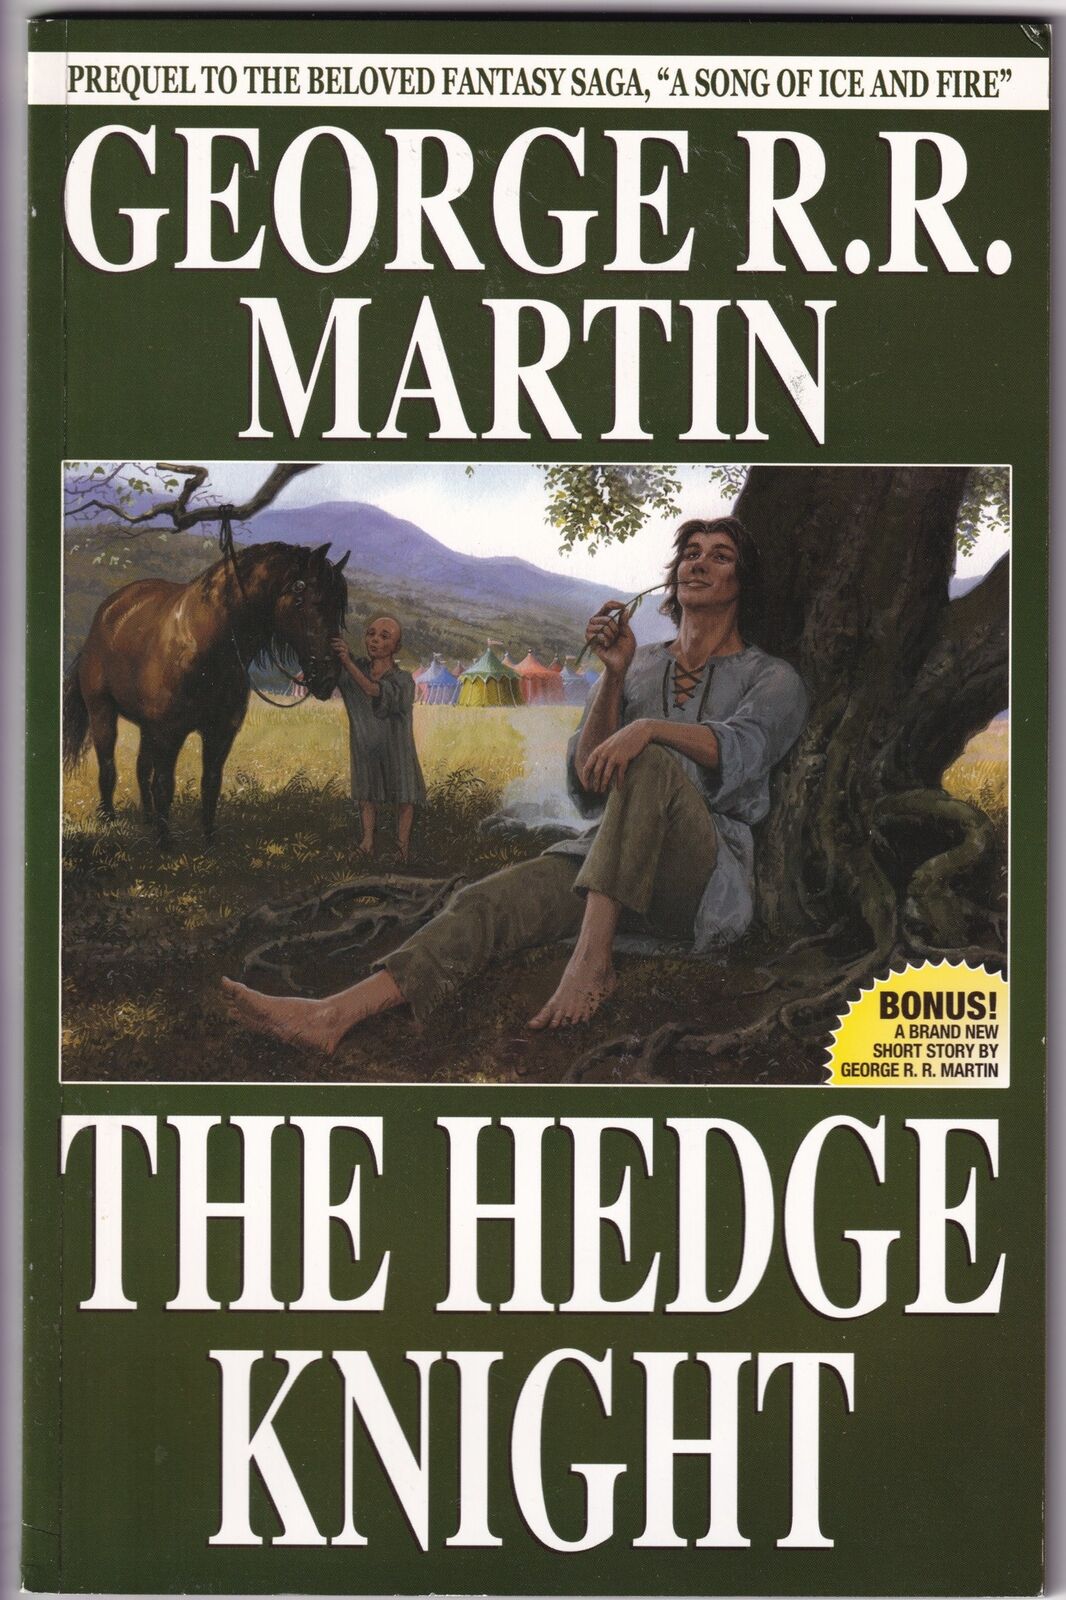 Devil's Due Hedge Knight Vol #1 TPB 2004 GN George RR Martin GoT ASOIAF Prequel